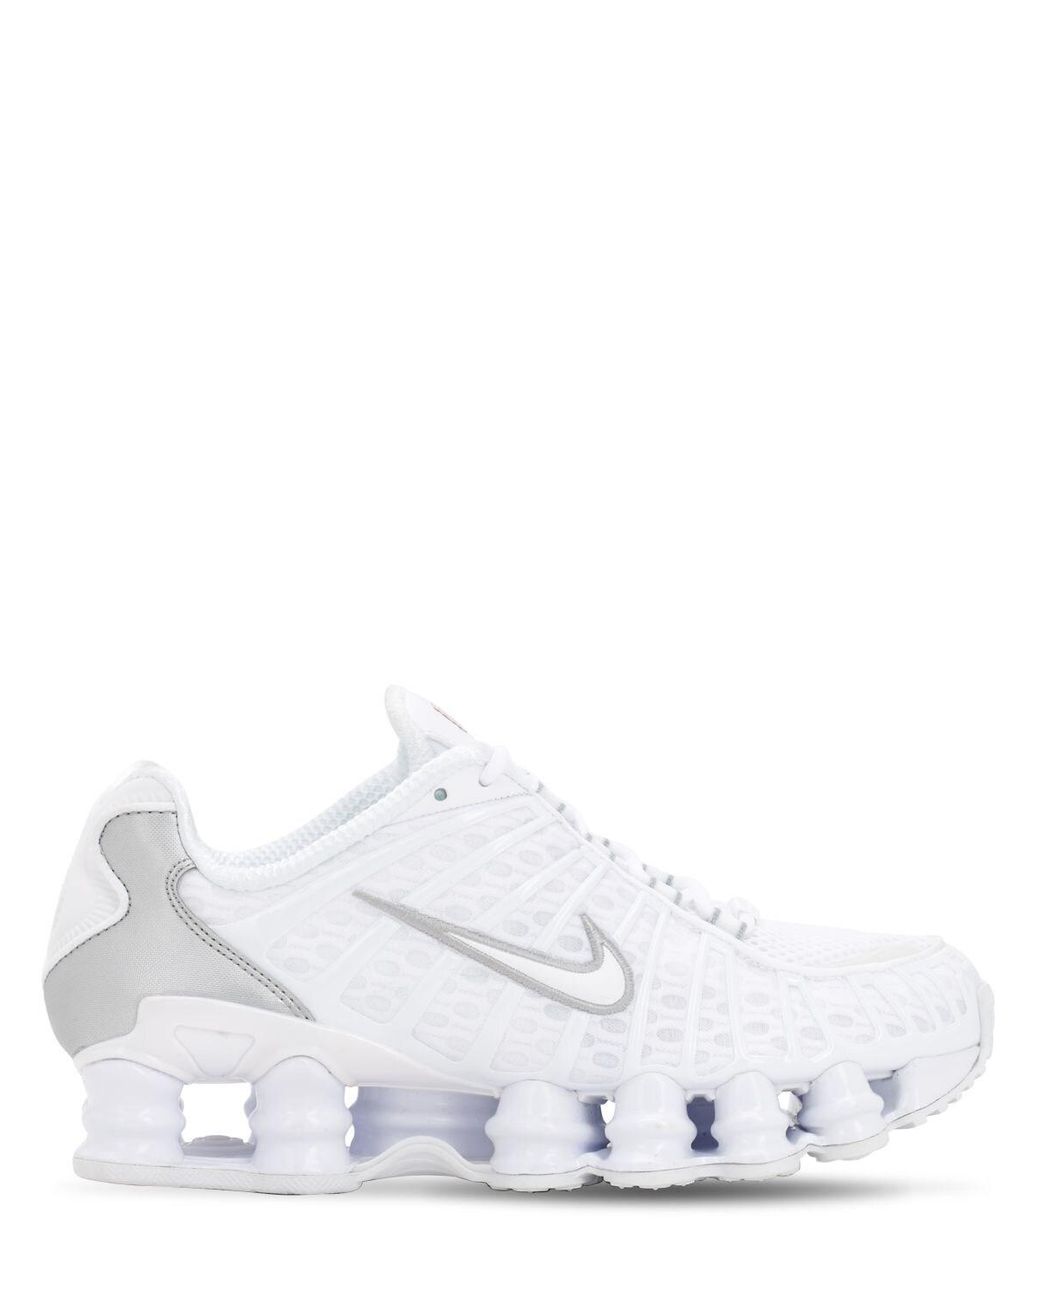 Nike Shox Total Sneakers in White - Lyst